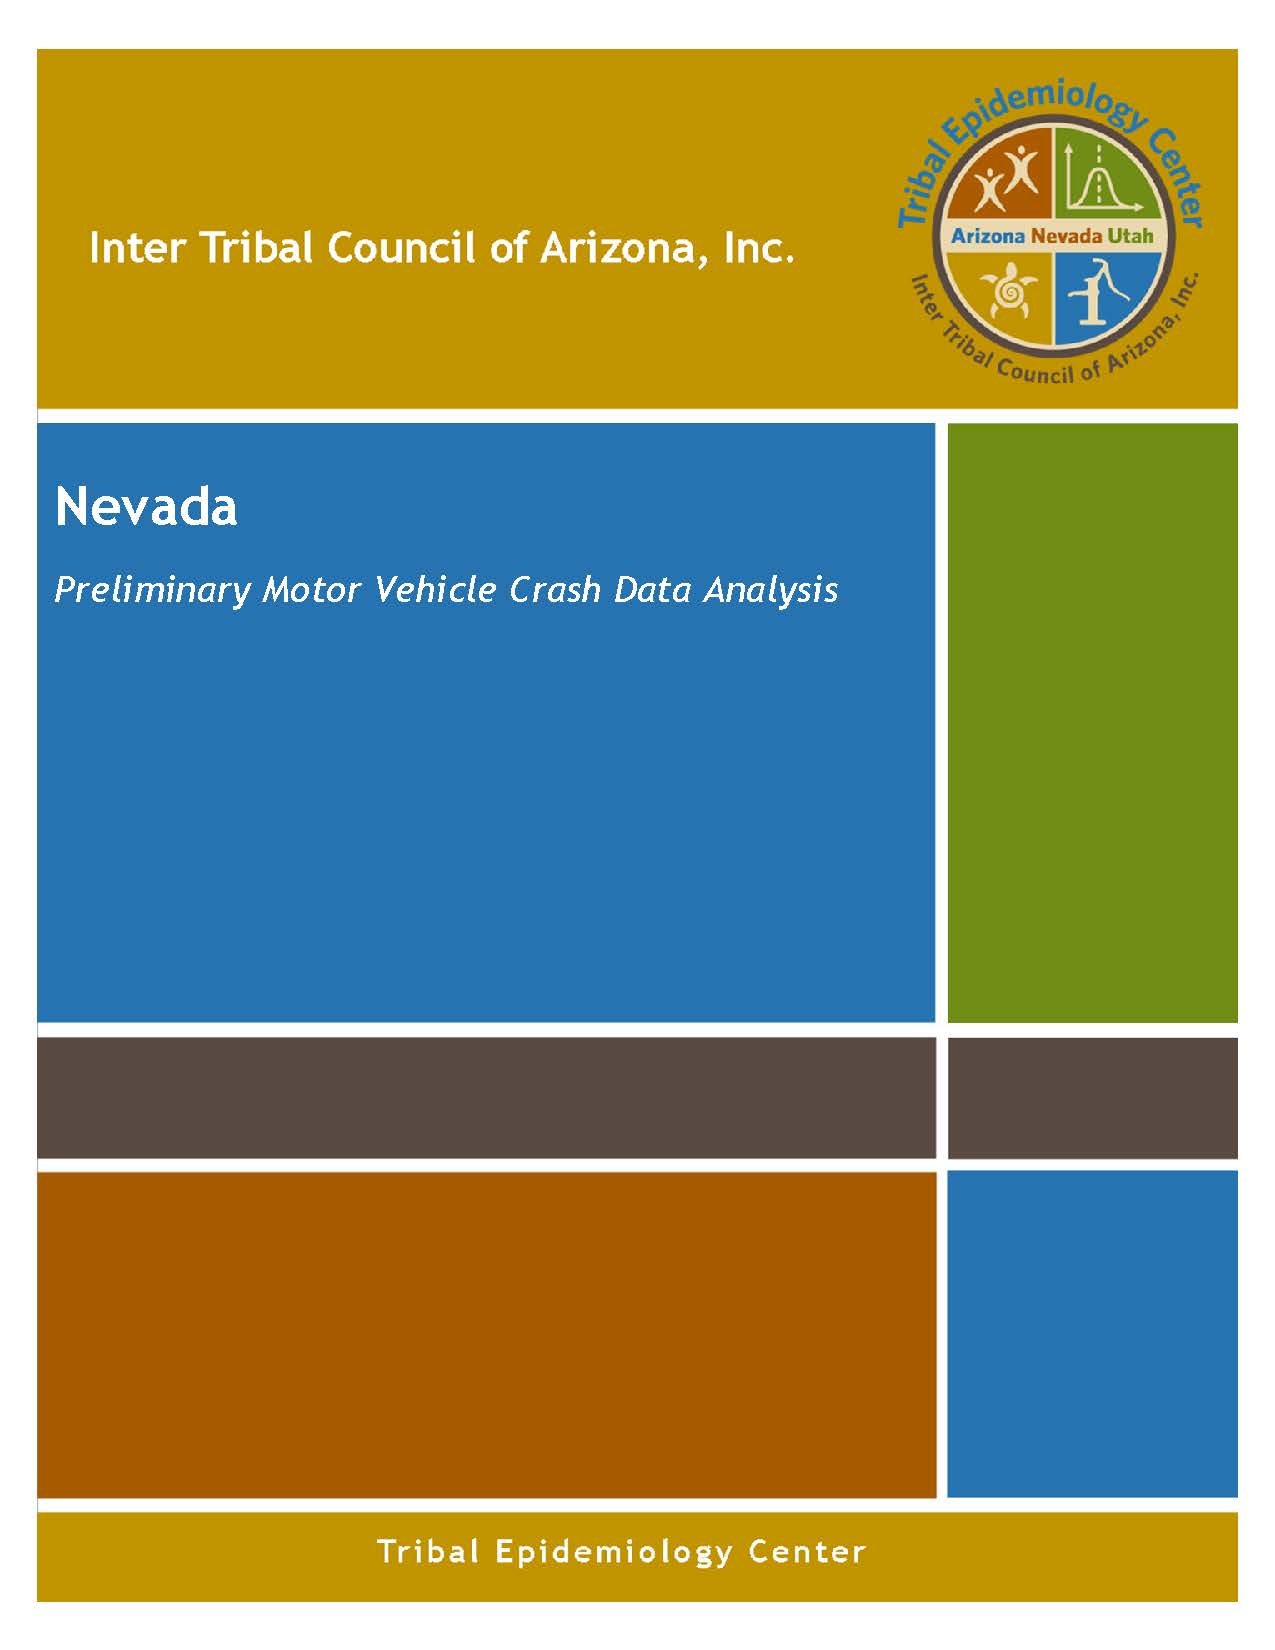 Nevada Preliminary Motor Vehicle Crash Data Analysis